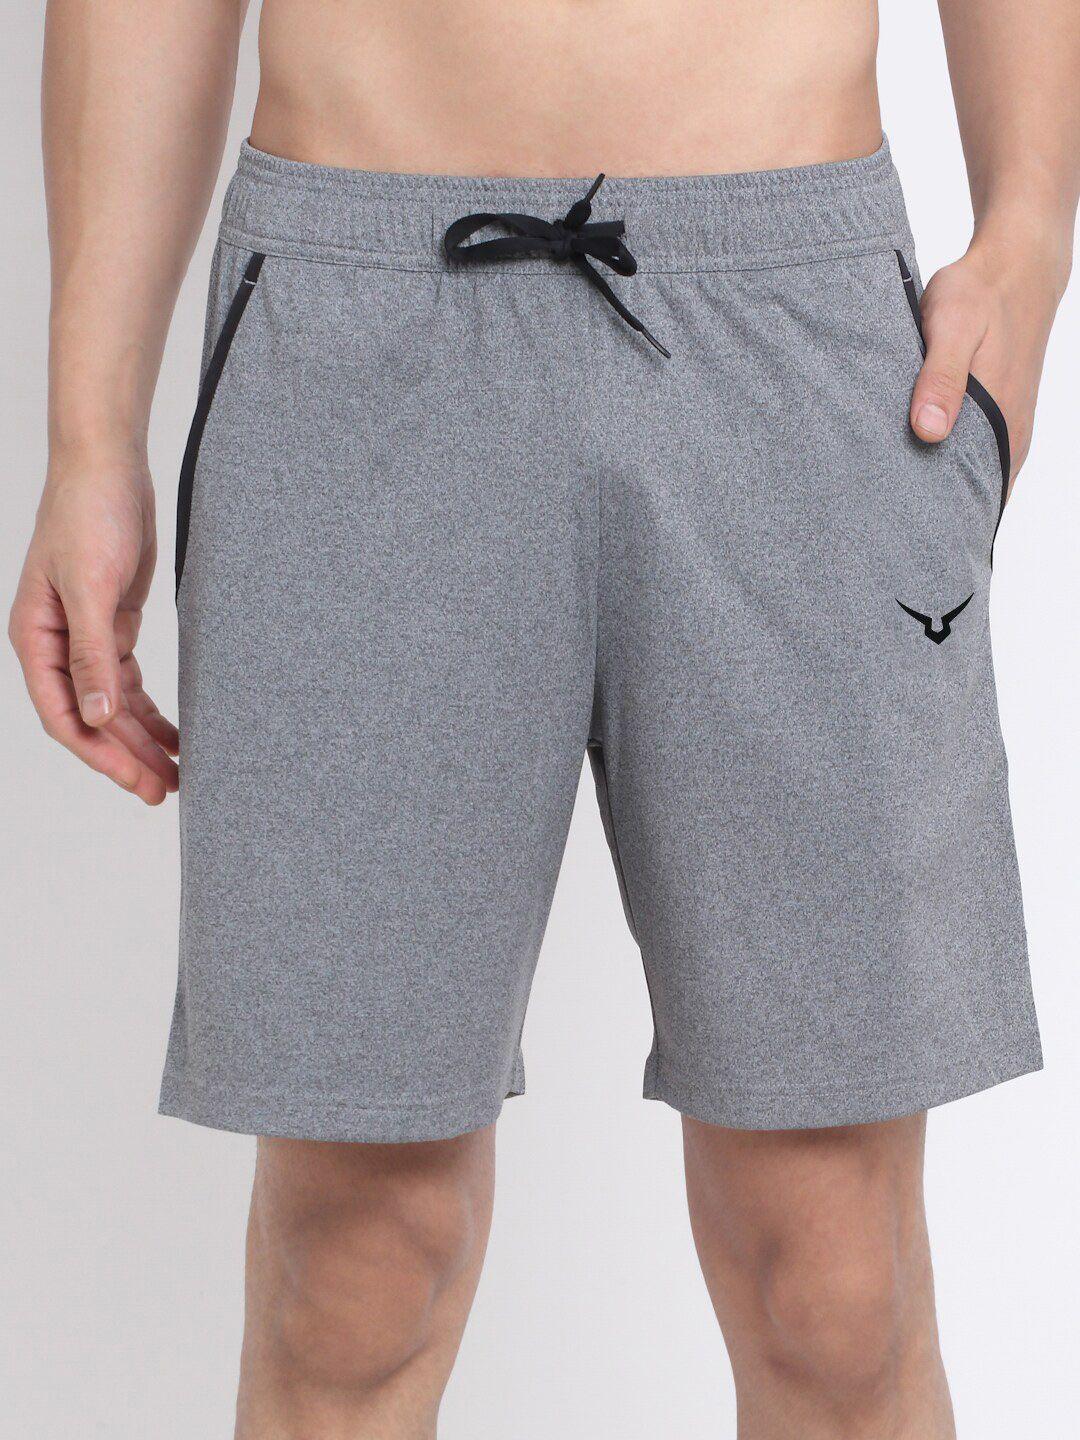 invincible-men-grey-running-sports-shorts